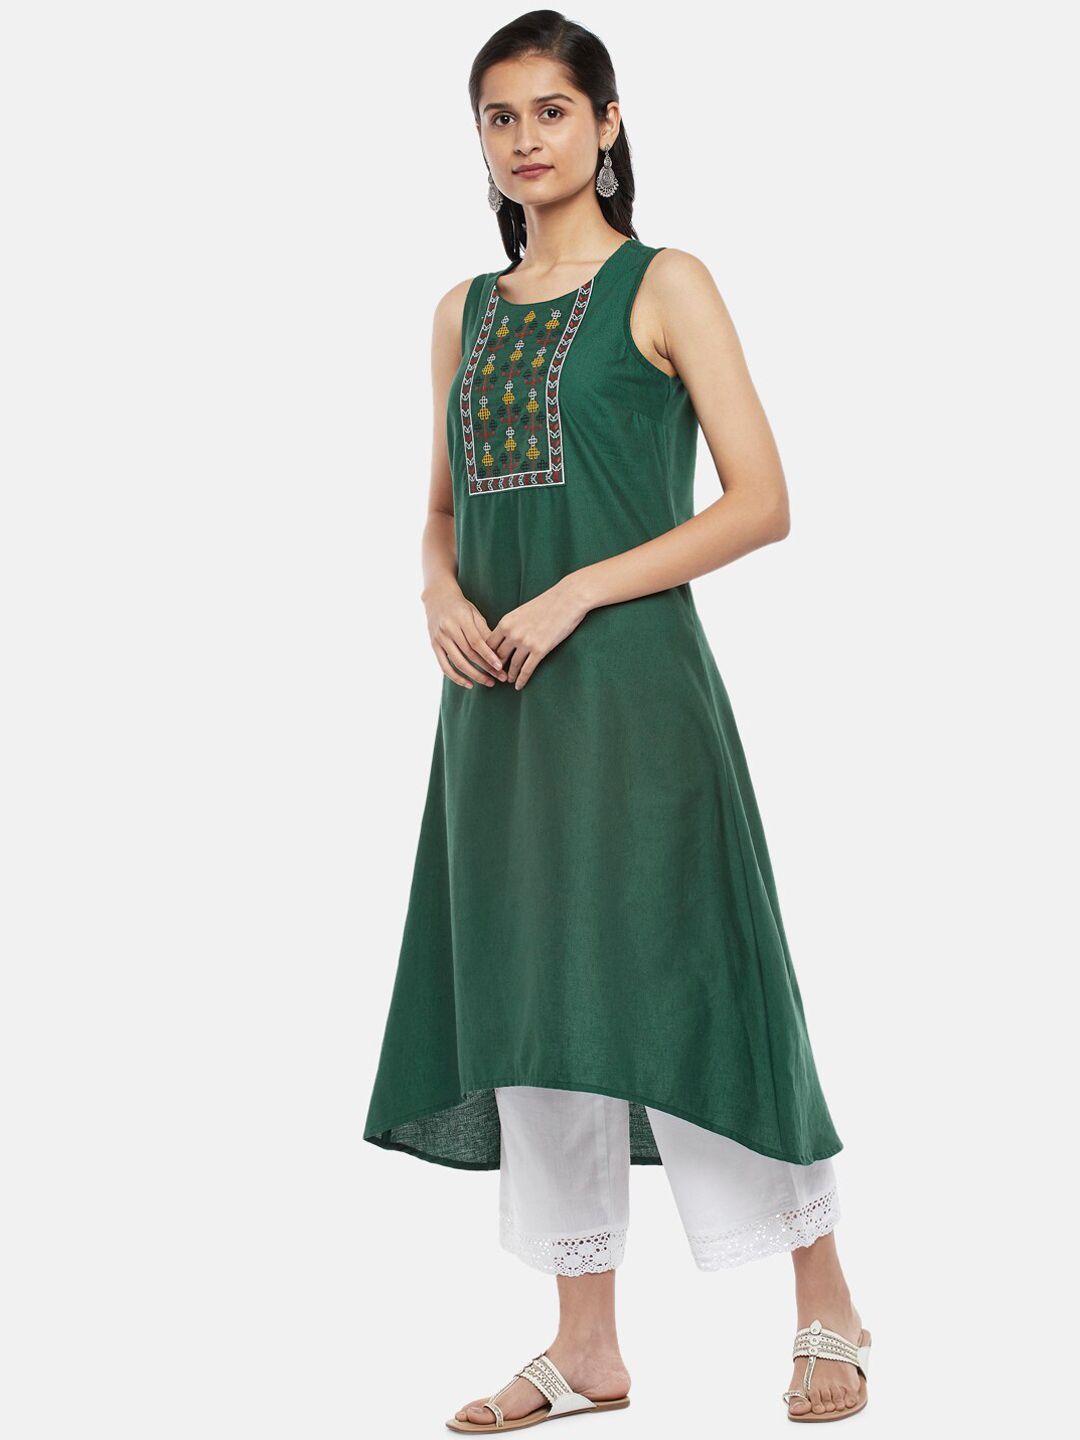 RANGMANCH BY PANTALOONS Women Olive Green Geometric Yoke Design Kurta Price in India